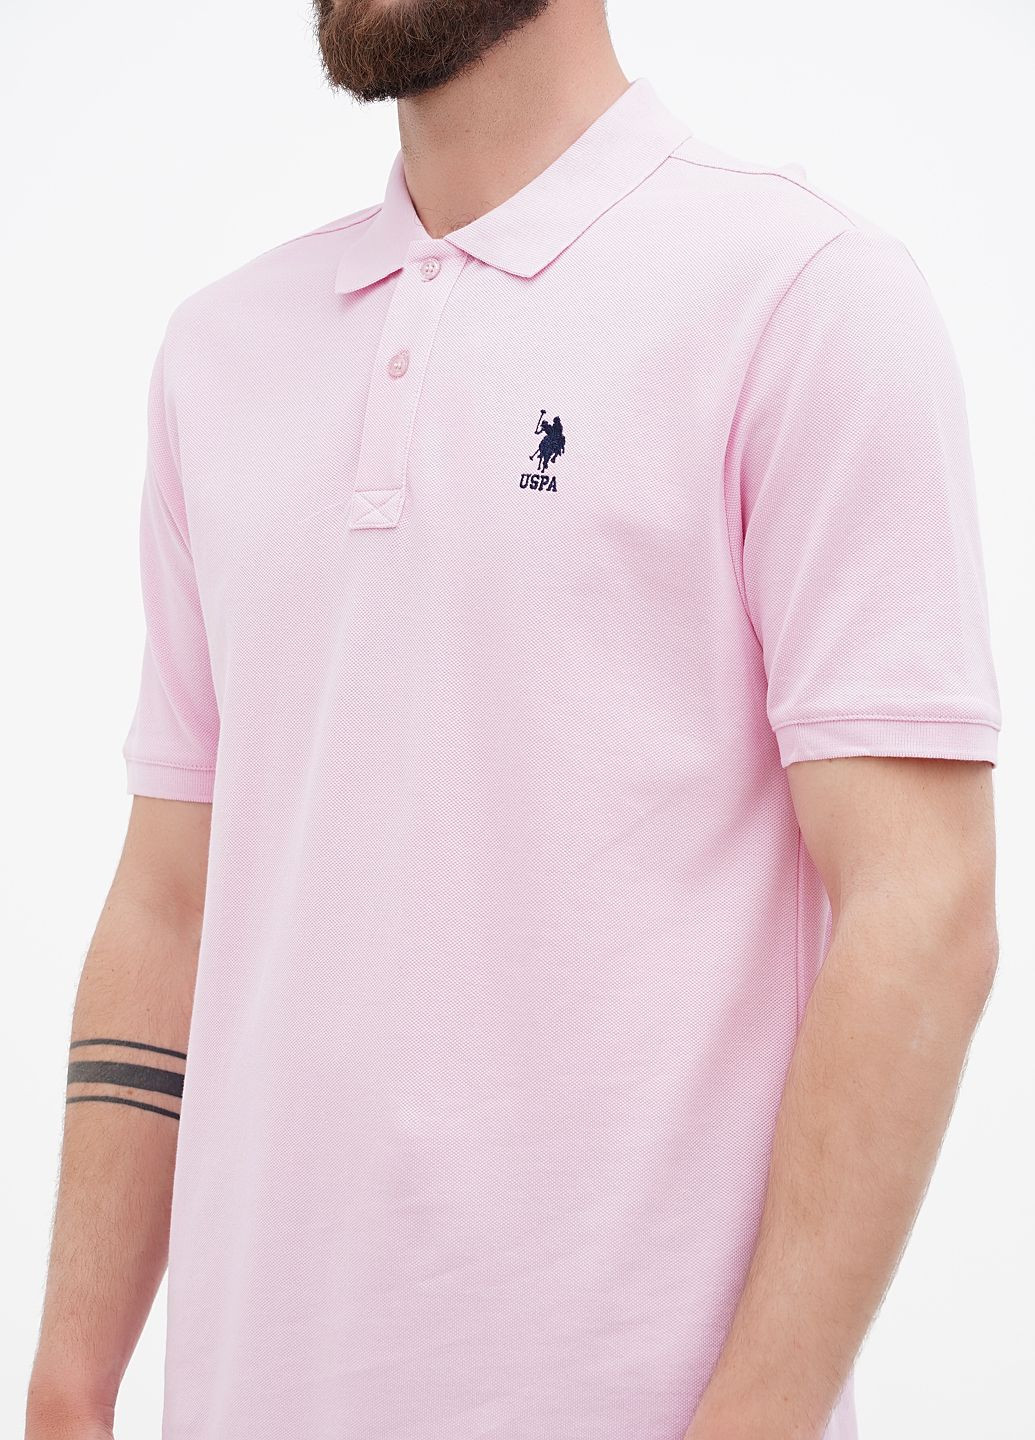 Розовая футболка-футболка поло u.s. polo assn мужская для мужчин U.S. Polo Assn.